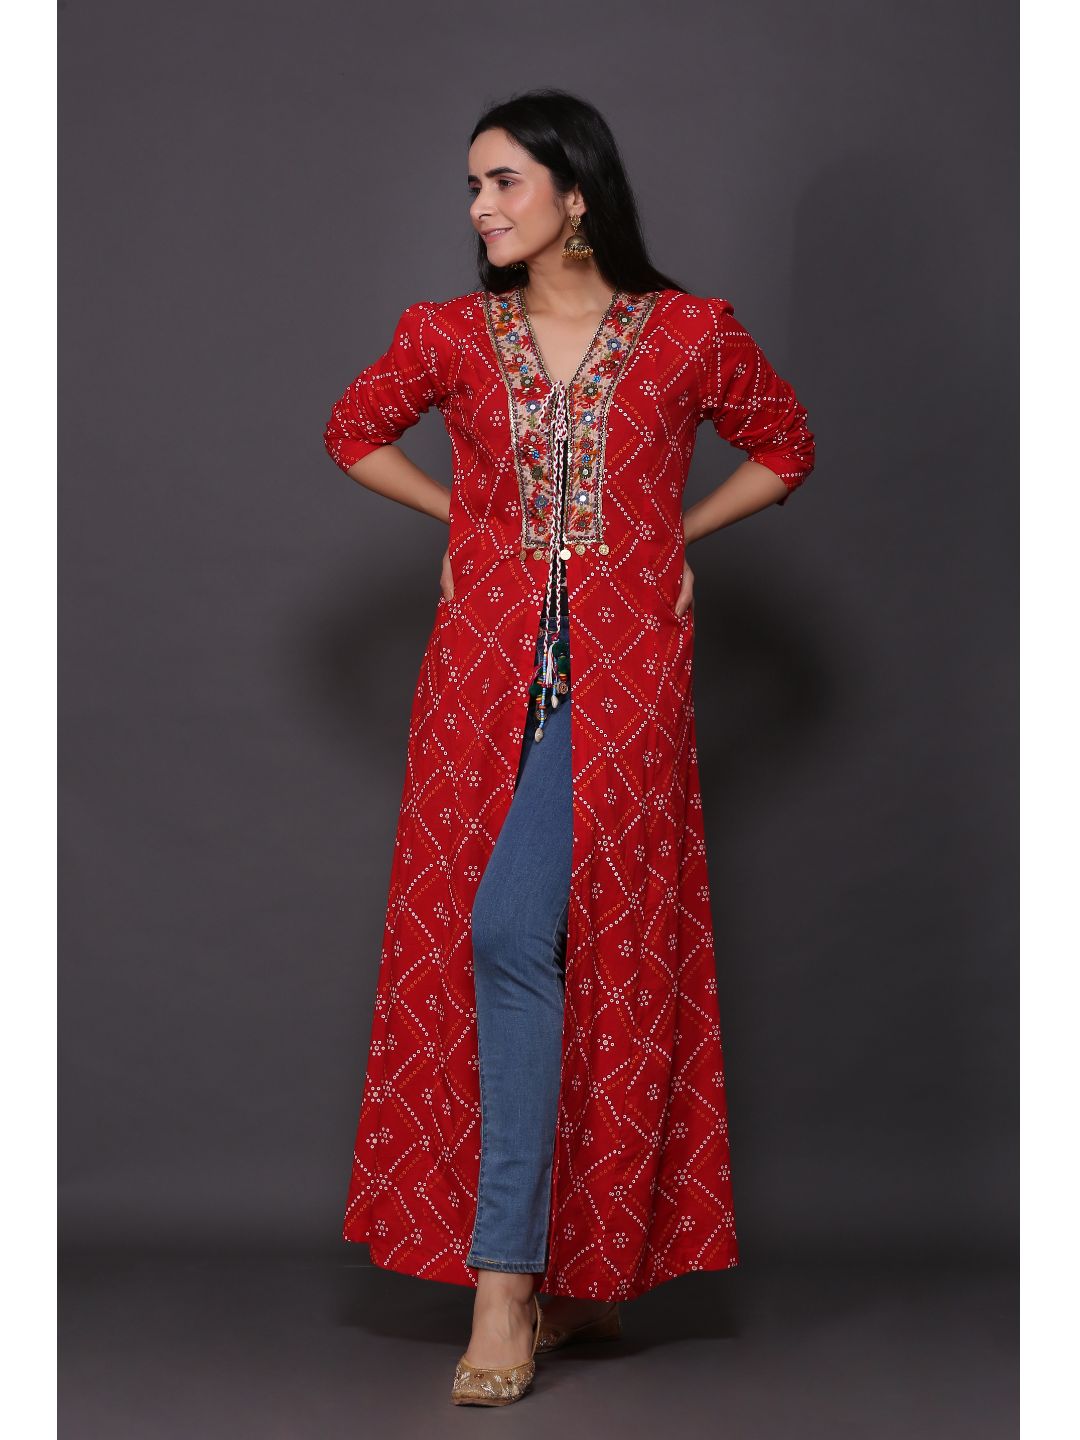 Red-Bandhani-Jacket-With-Cotton-Dress